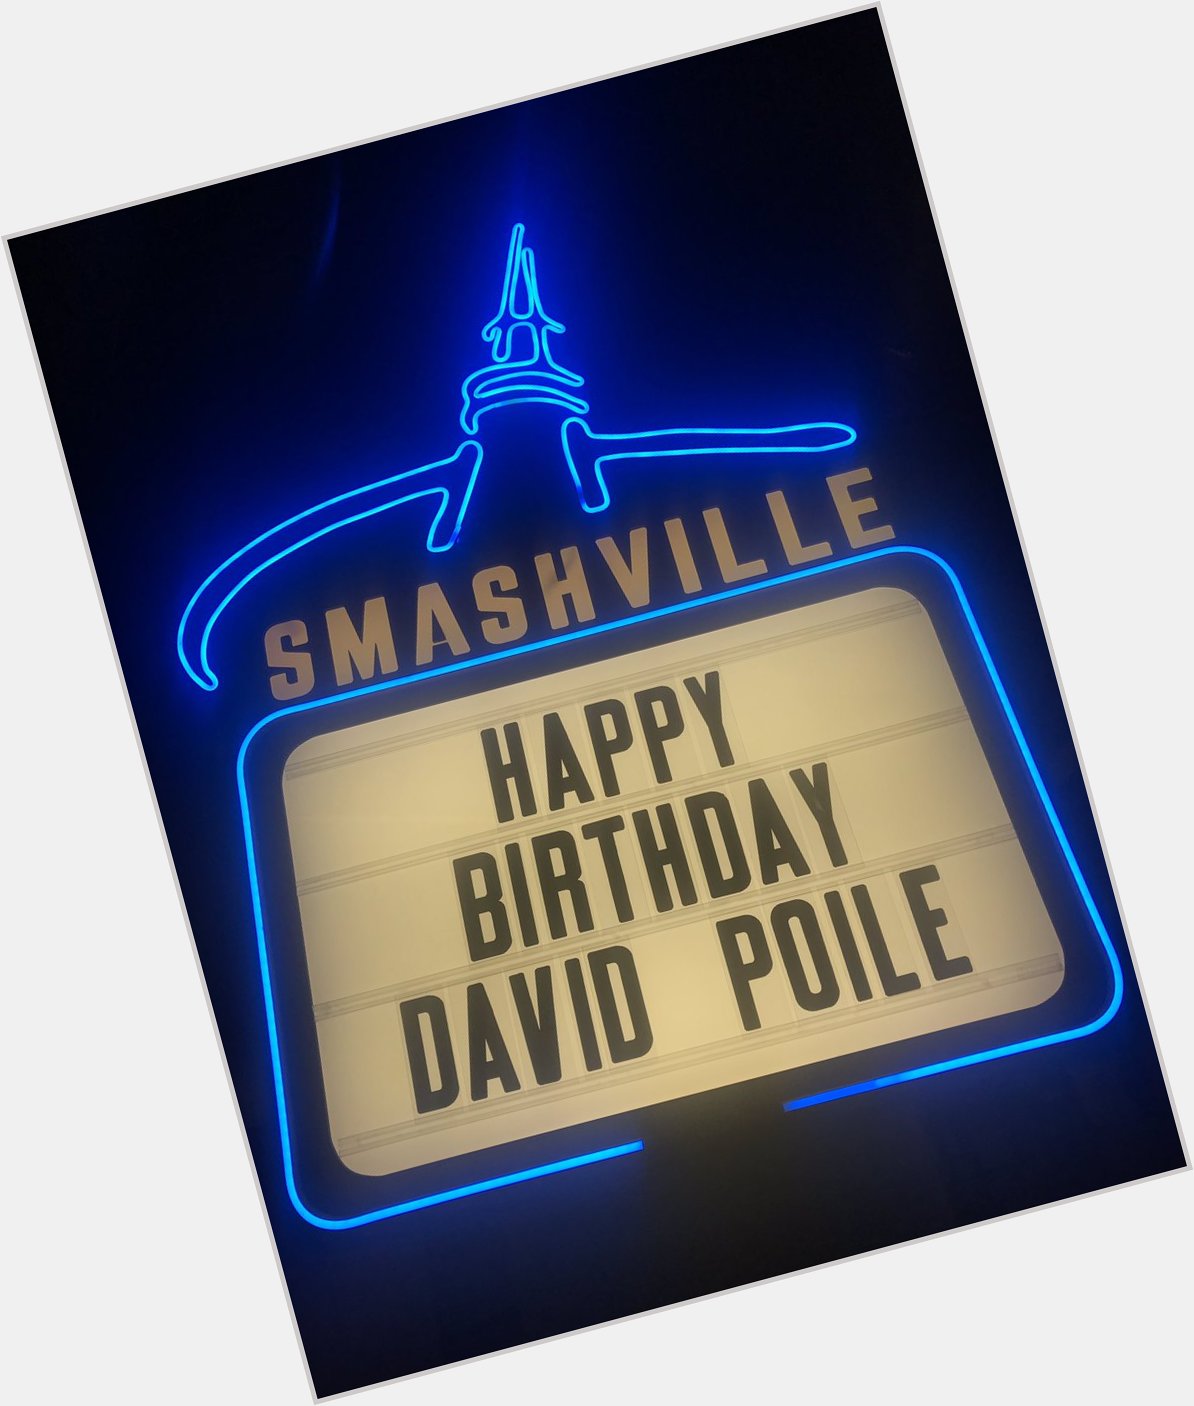 We re wishing GM David Poile a very happy birthday! 